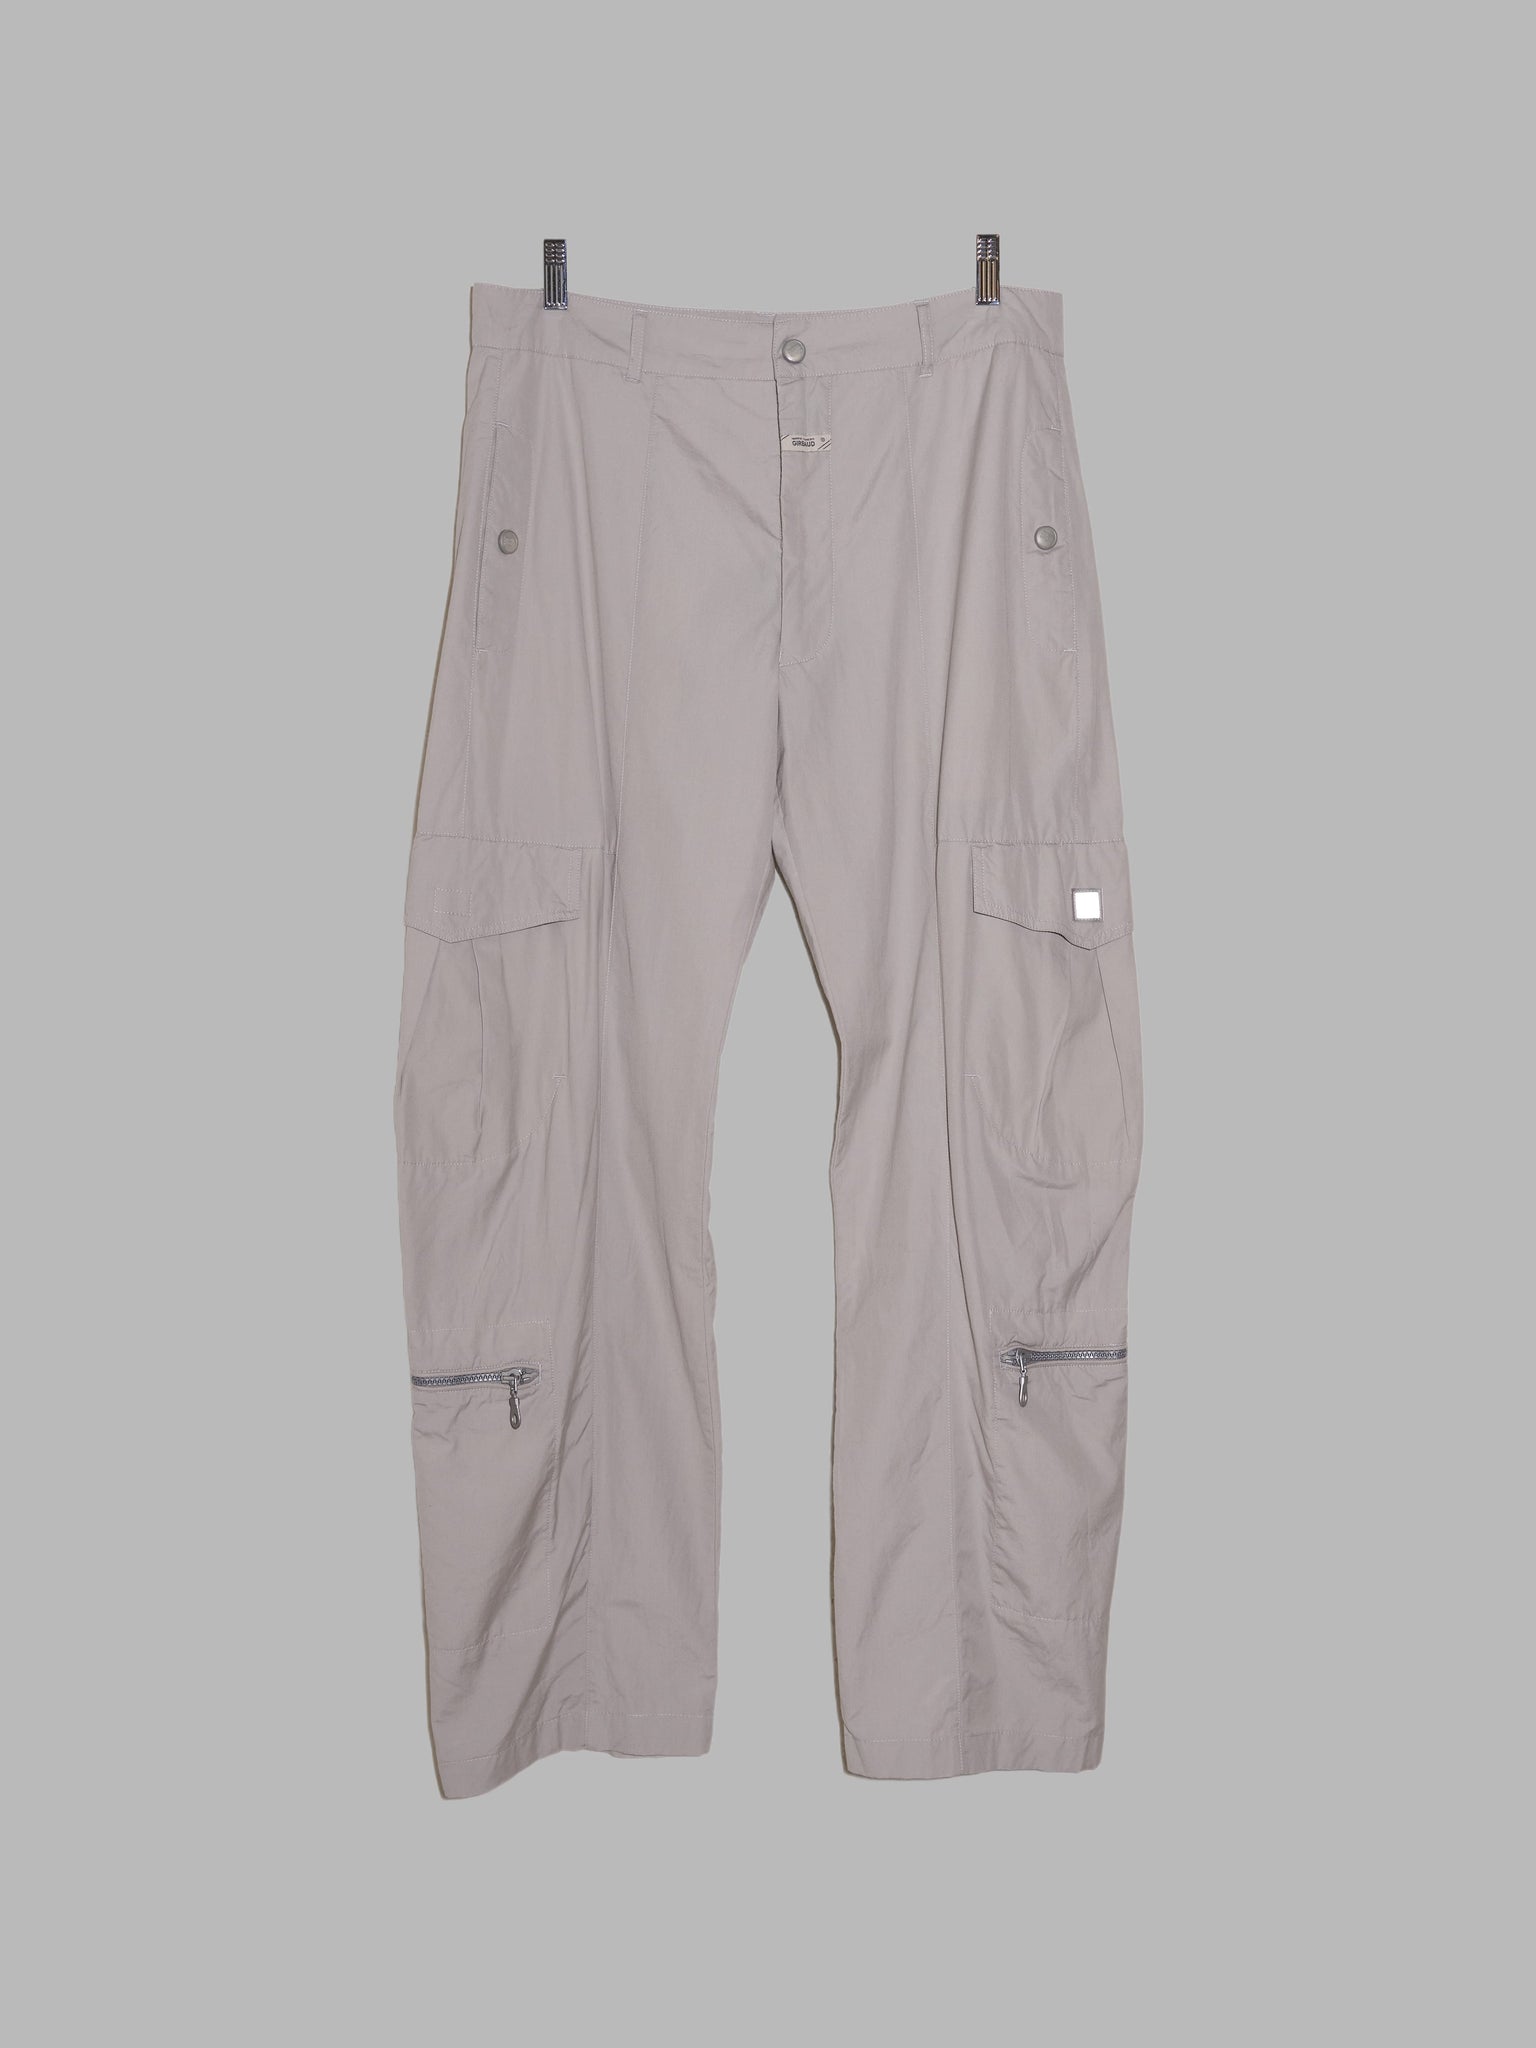 Marithe Francois Girbaud light grey cotton cargo pants - size 32